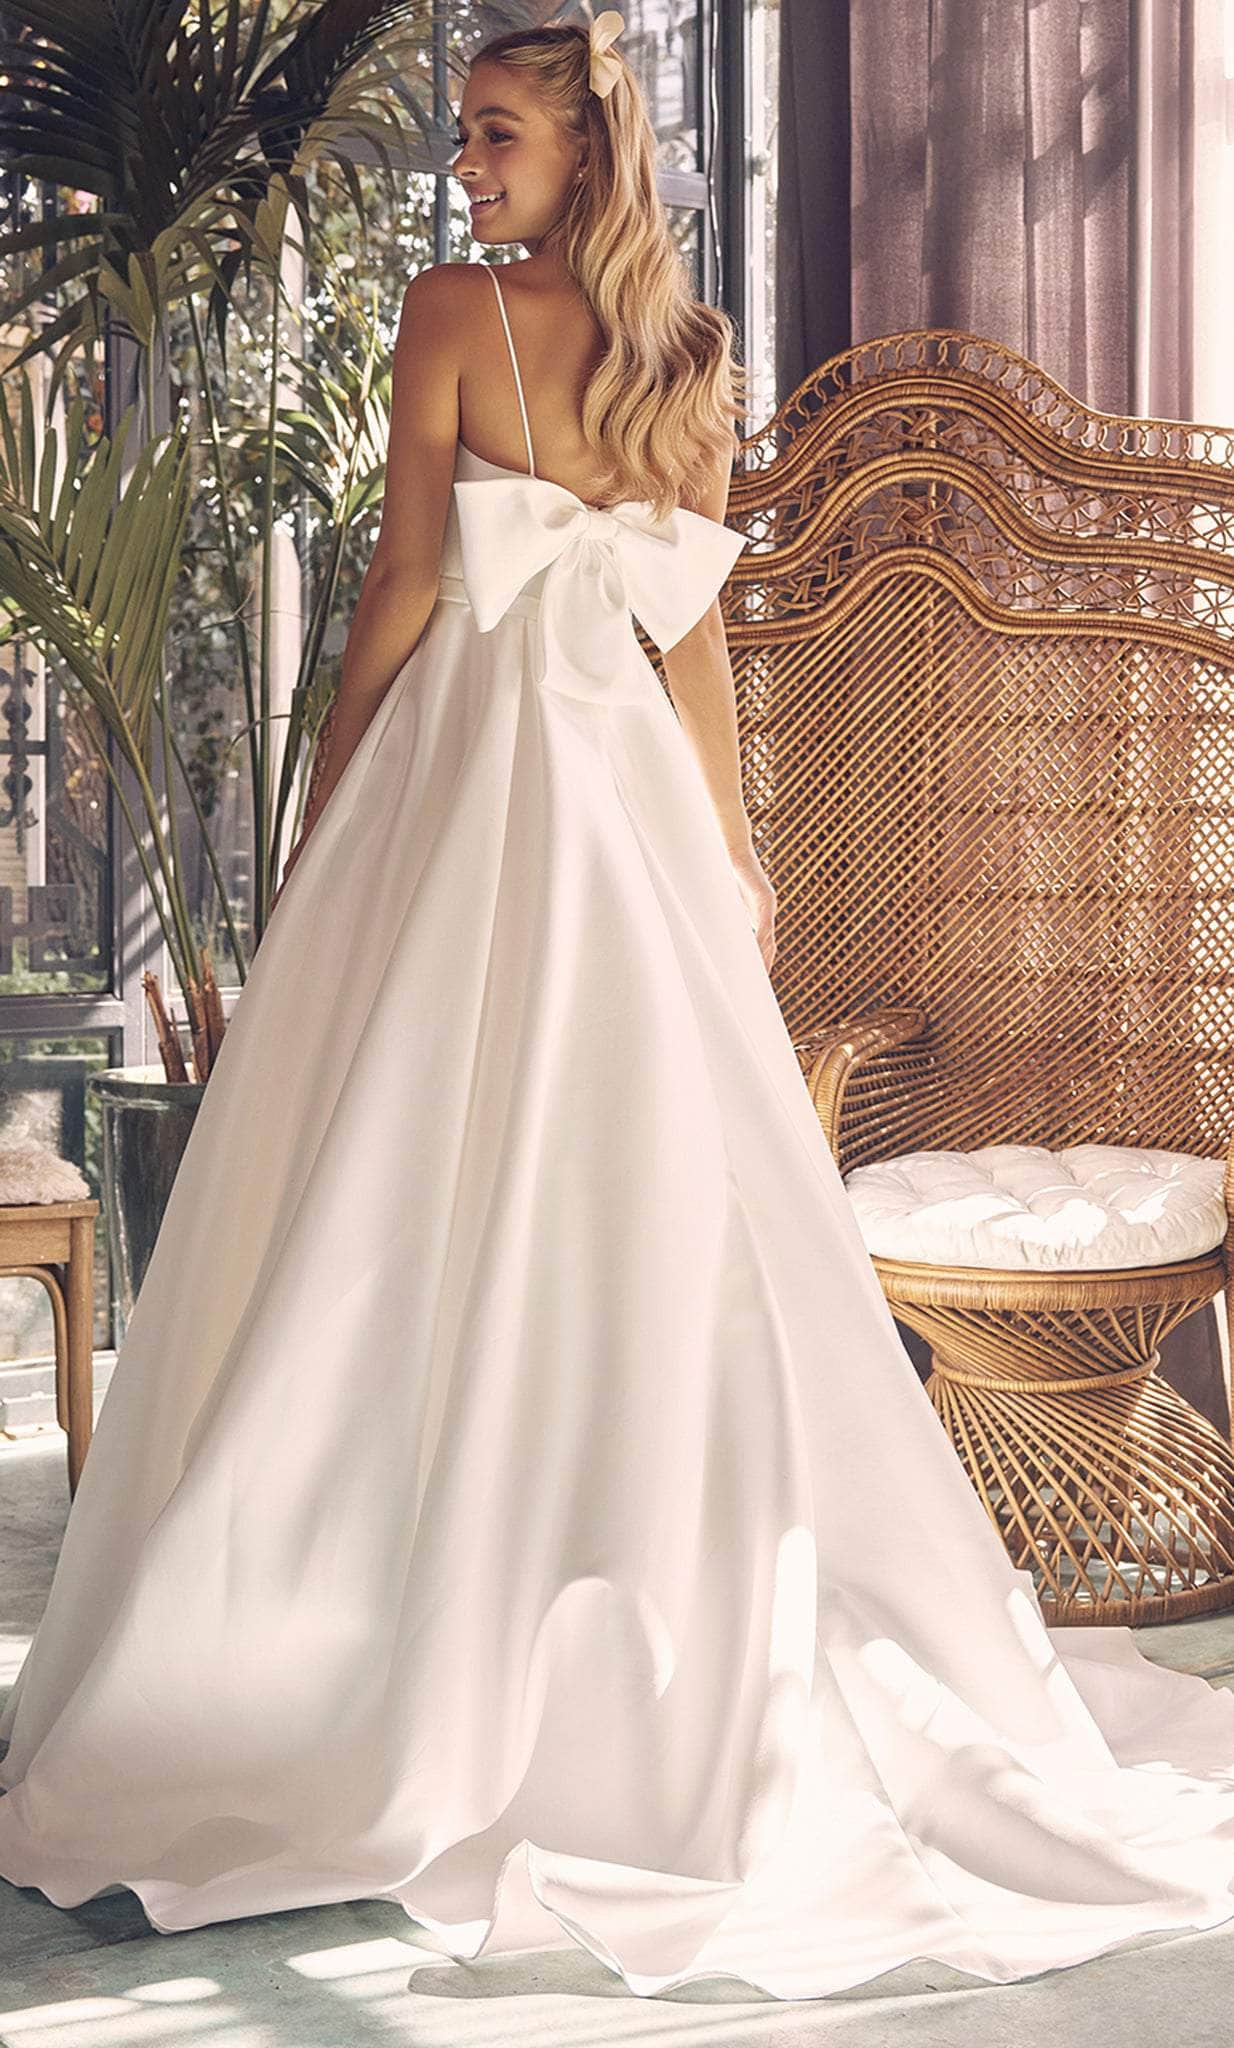 Nox Anabel Ball Gown Wedding Dress Corset x Back 16